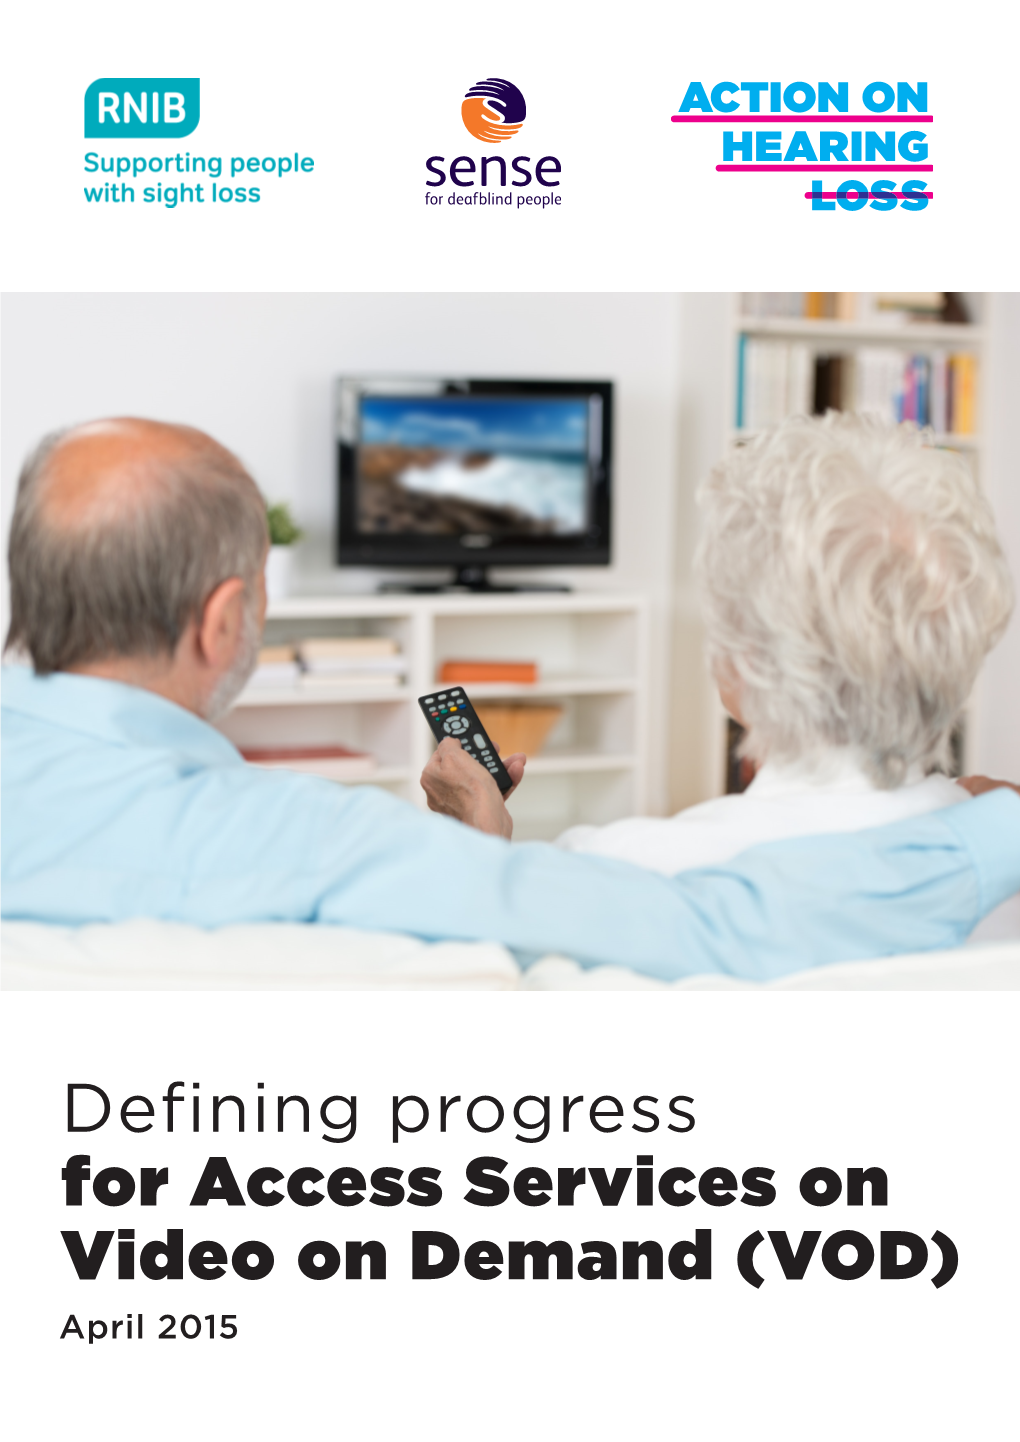 VOD) April 2015 Defining Progress Access Services on VOD